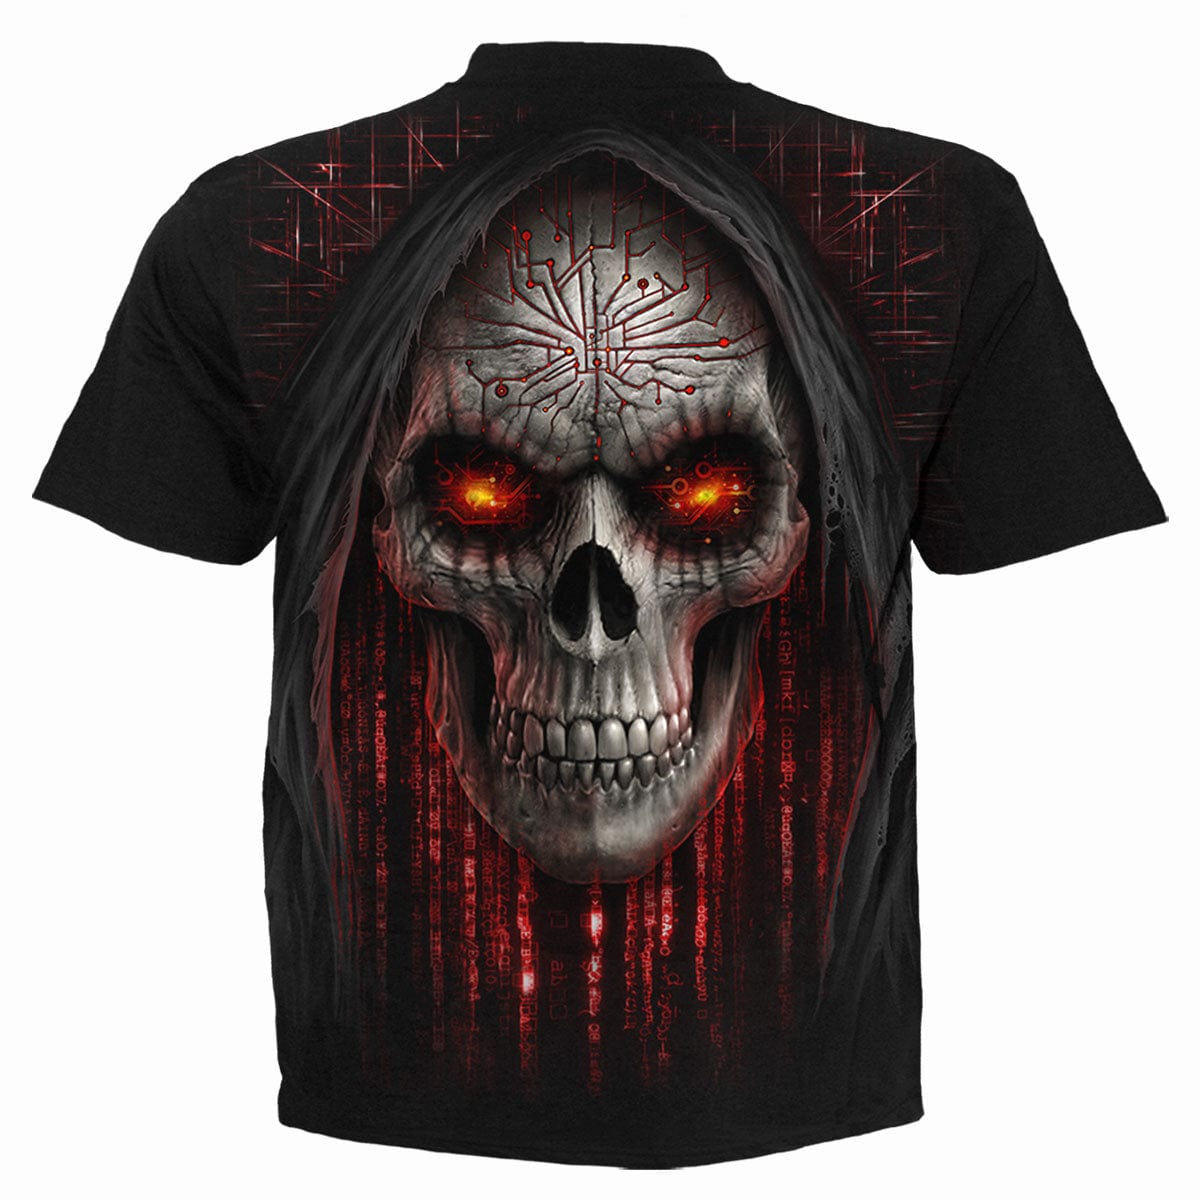 CYBER DEATH - T-Shirt Black - Spiral USA